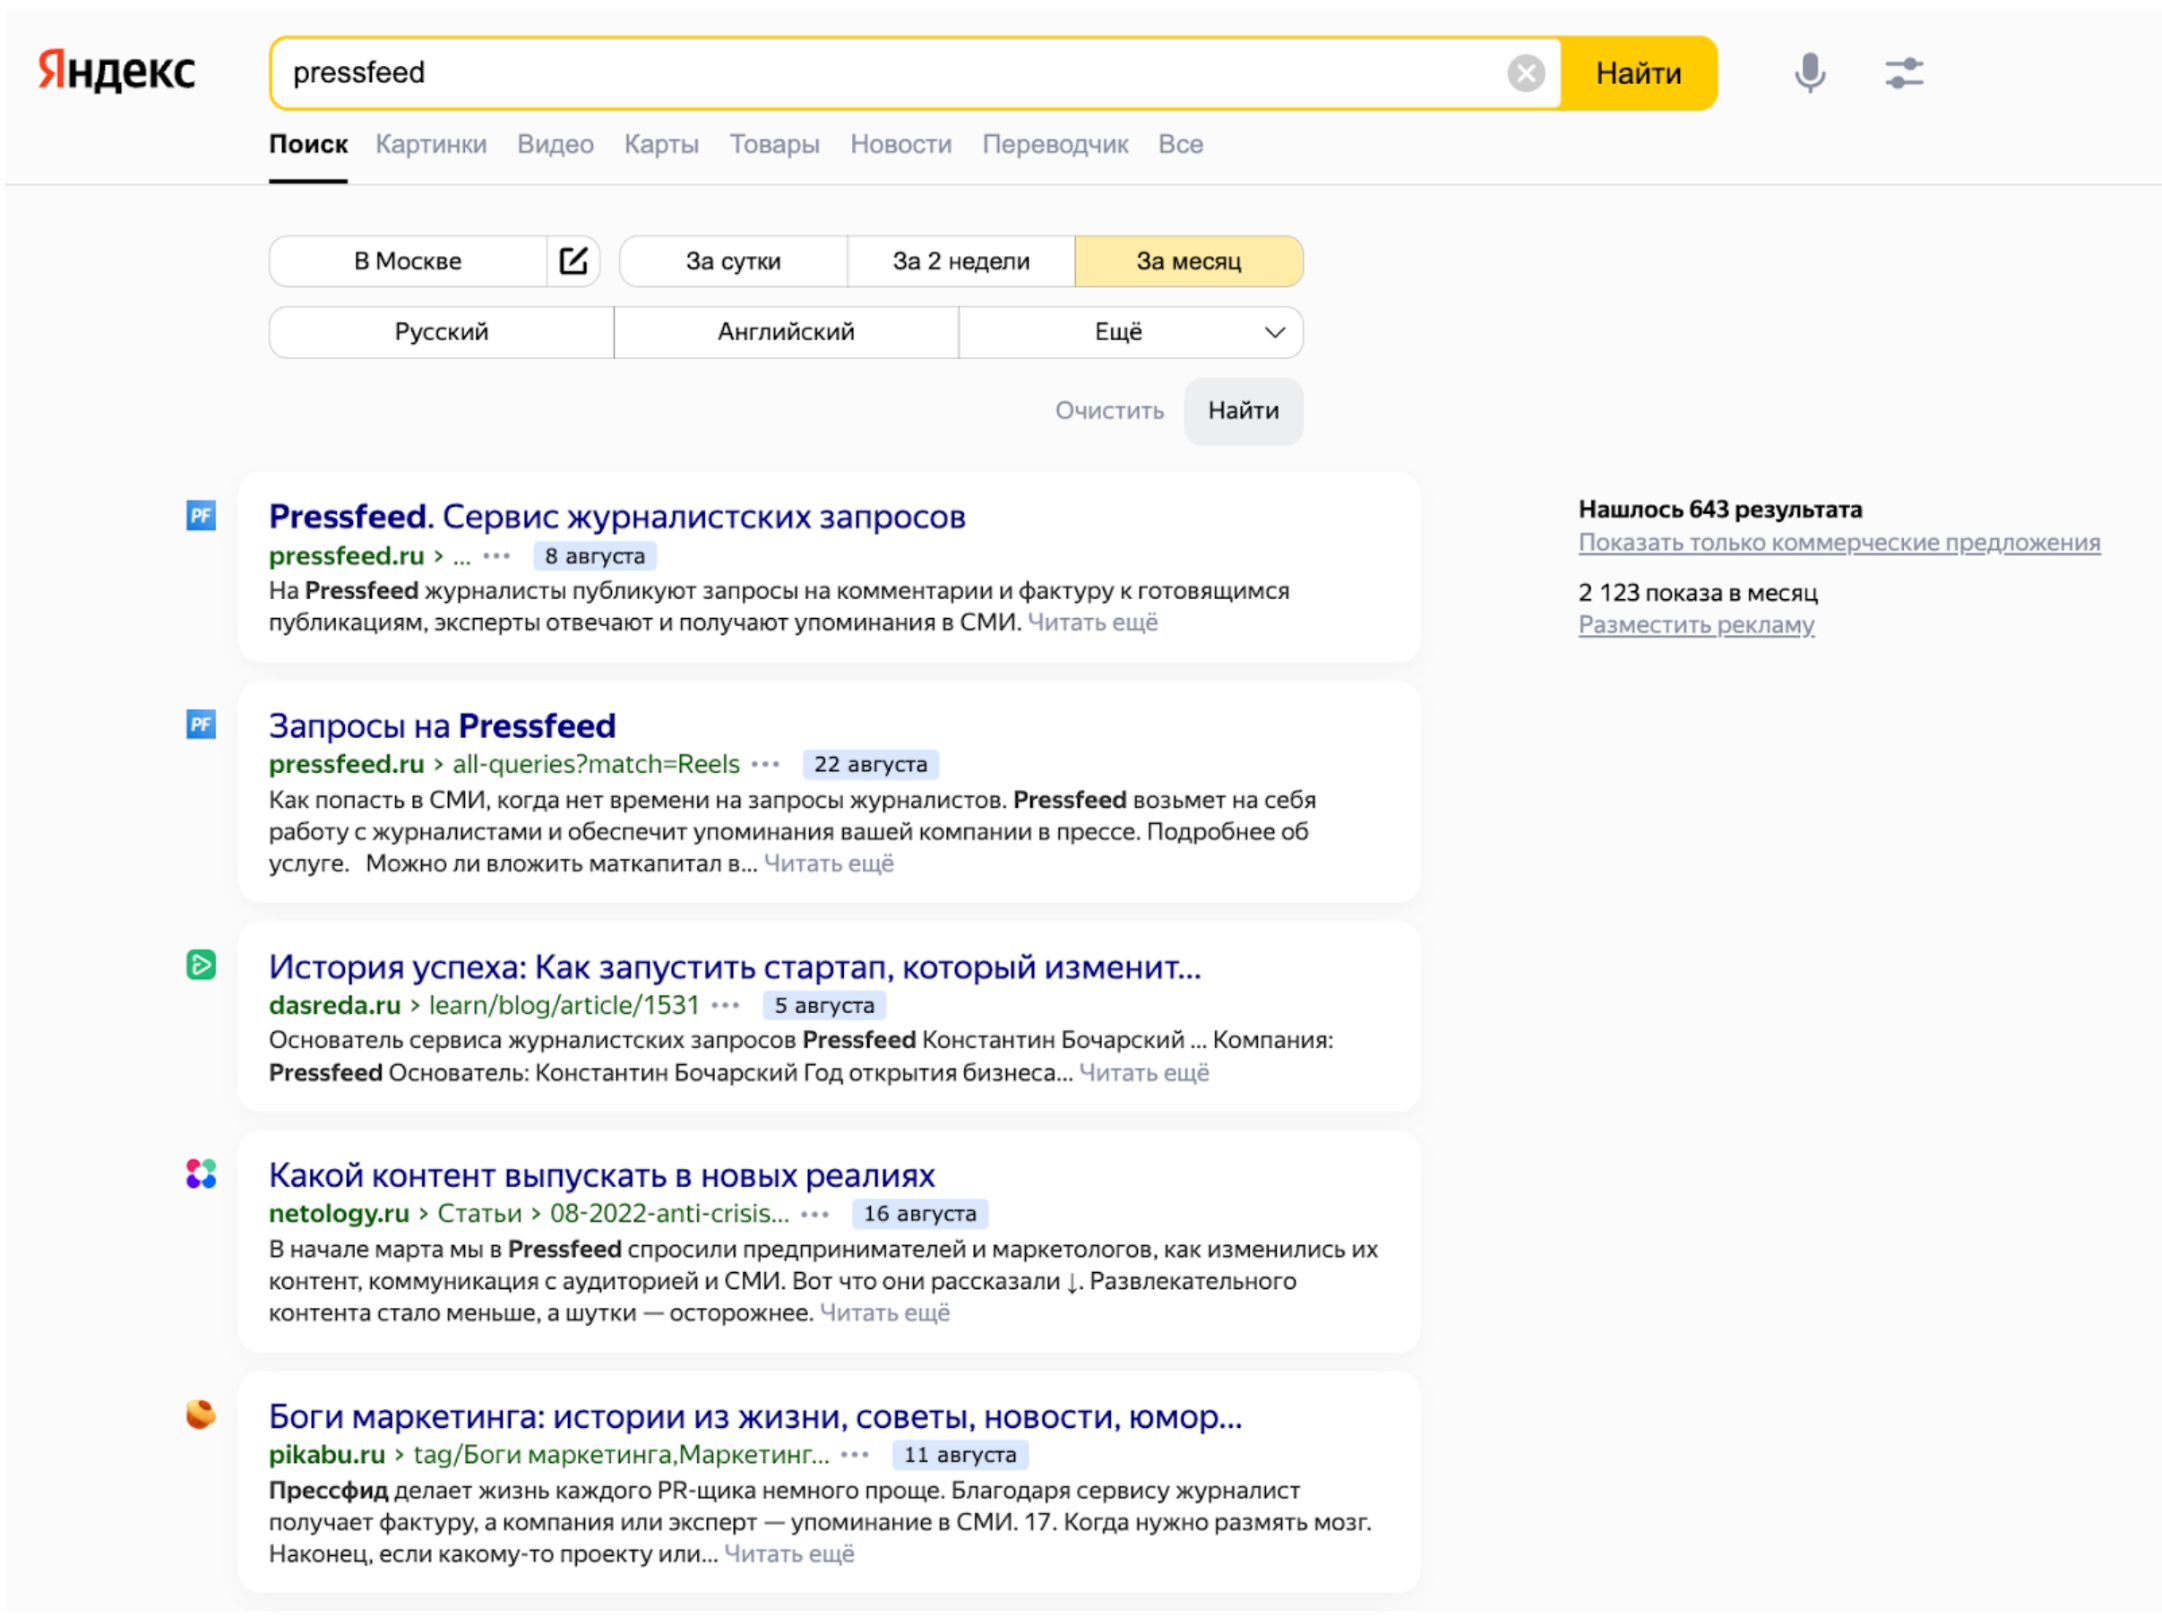 Выдача Яндекса по брендовому запросу